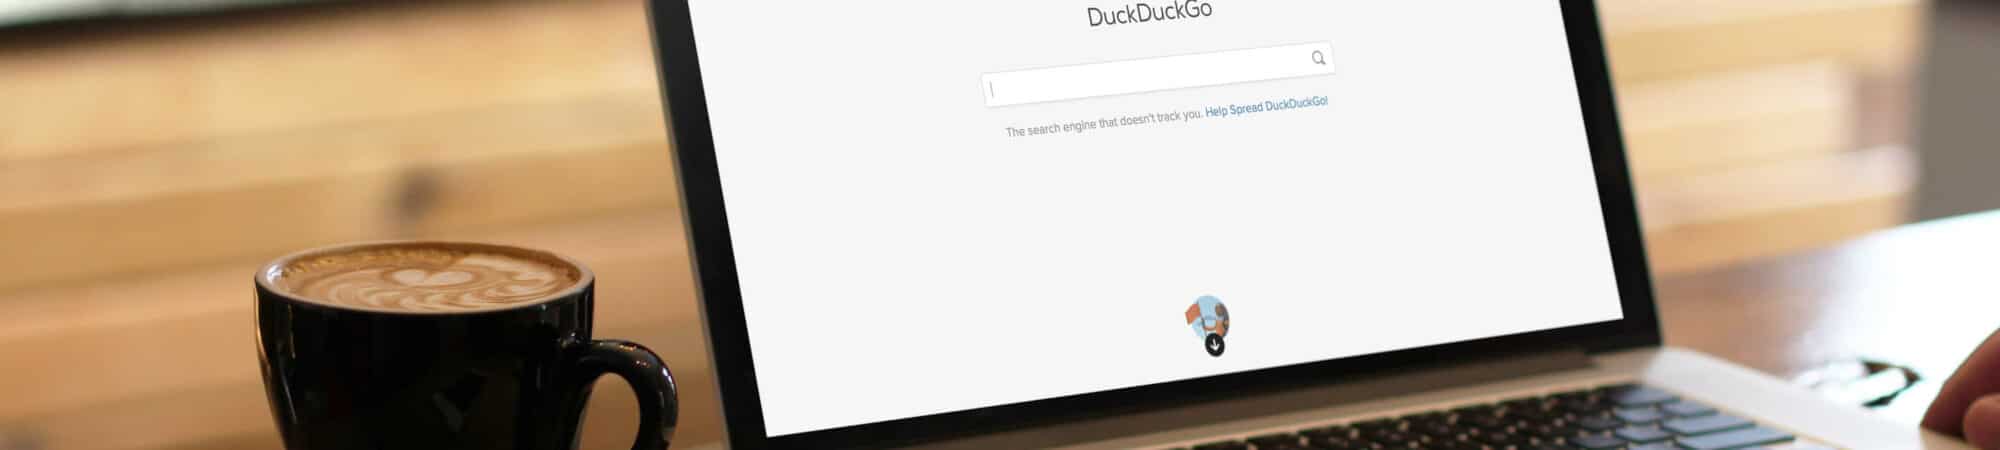 DuckDuckGo-on-Desktop-1-120118@2x-2000x450